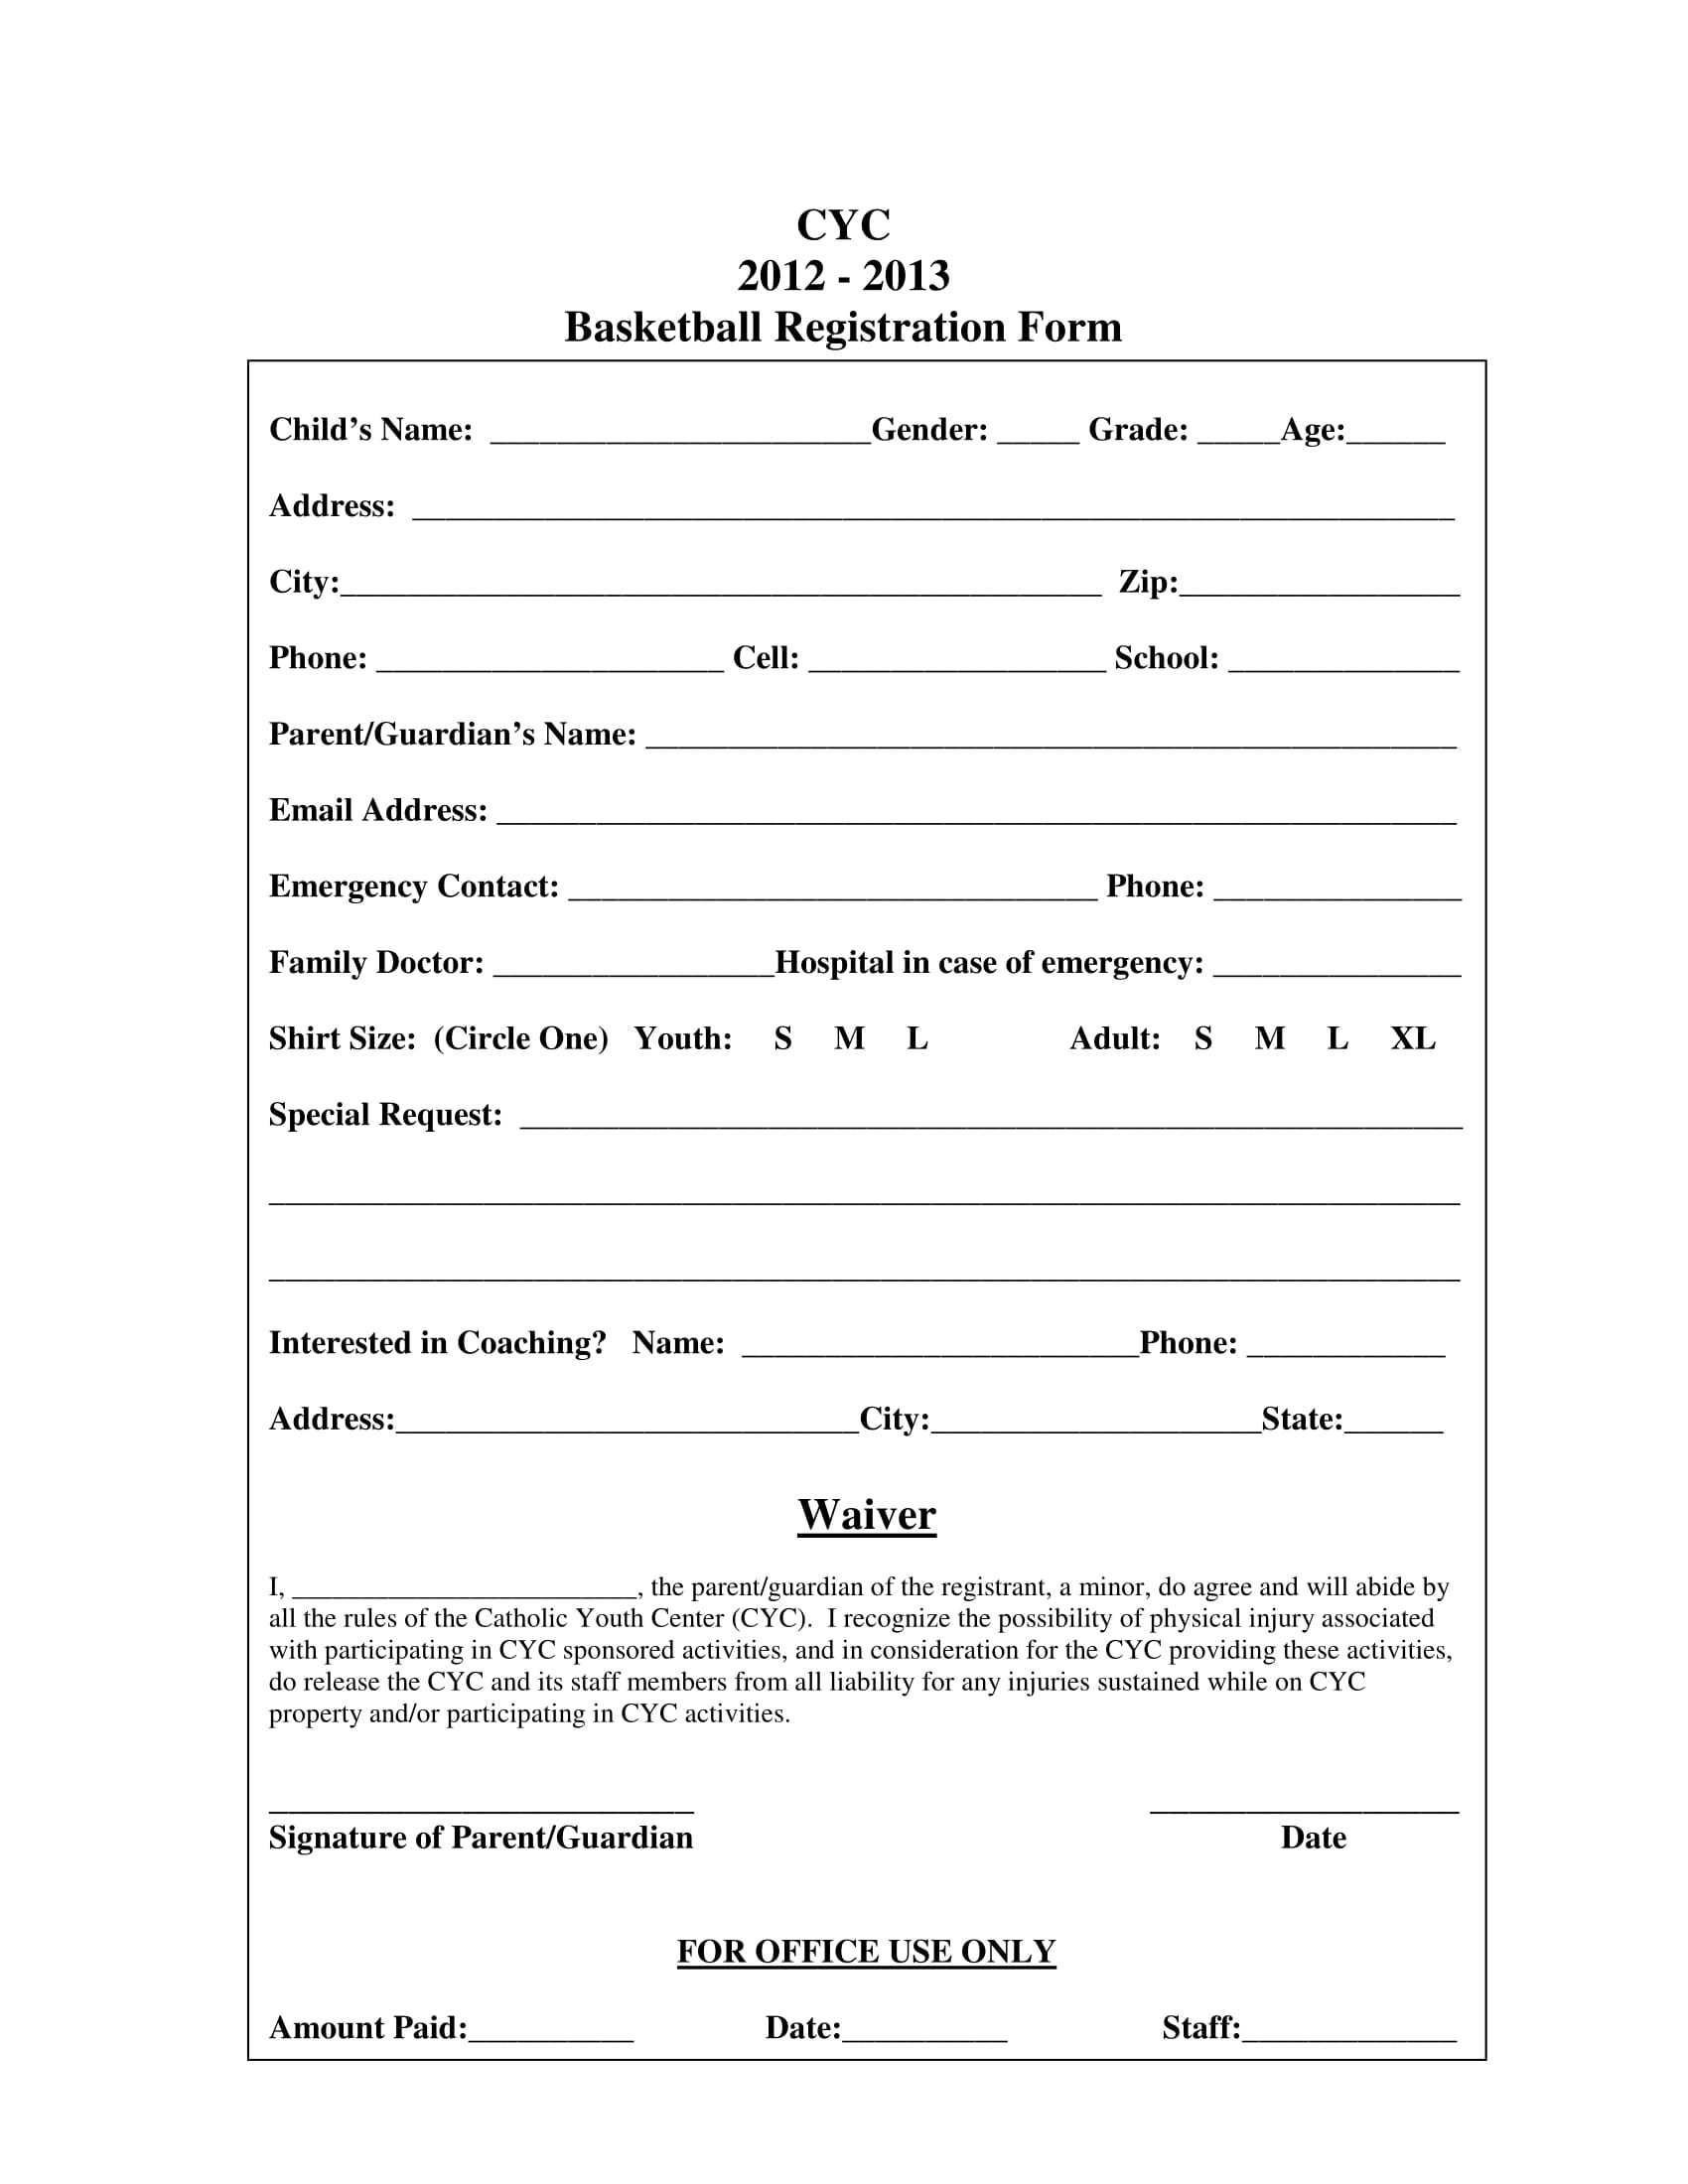 Basketball Registration Form Template Word – Dalep Throughout School Registration Form Template Word